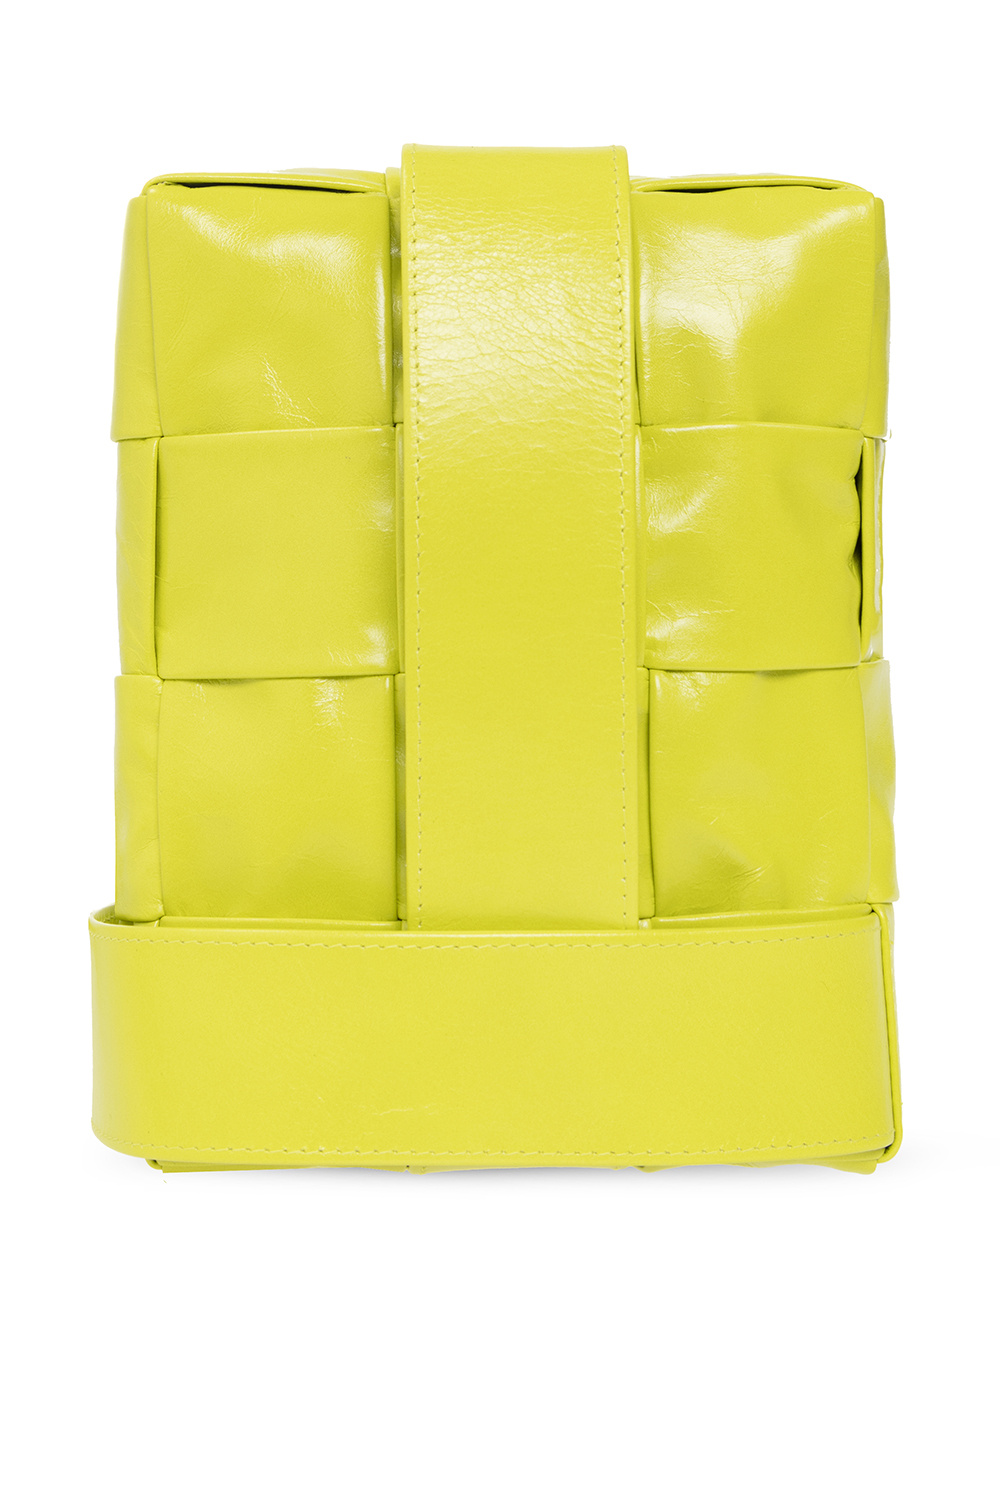 Bottega Veneta ‘Casette Mini’ shoulder bag